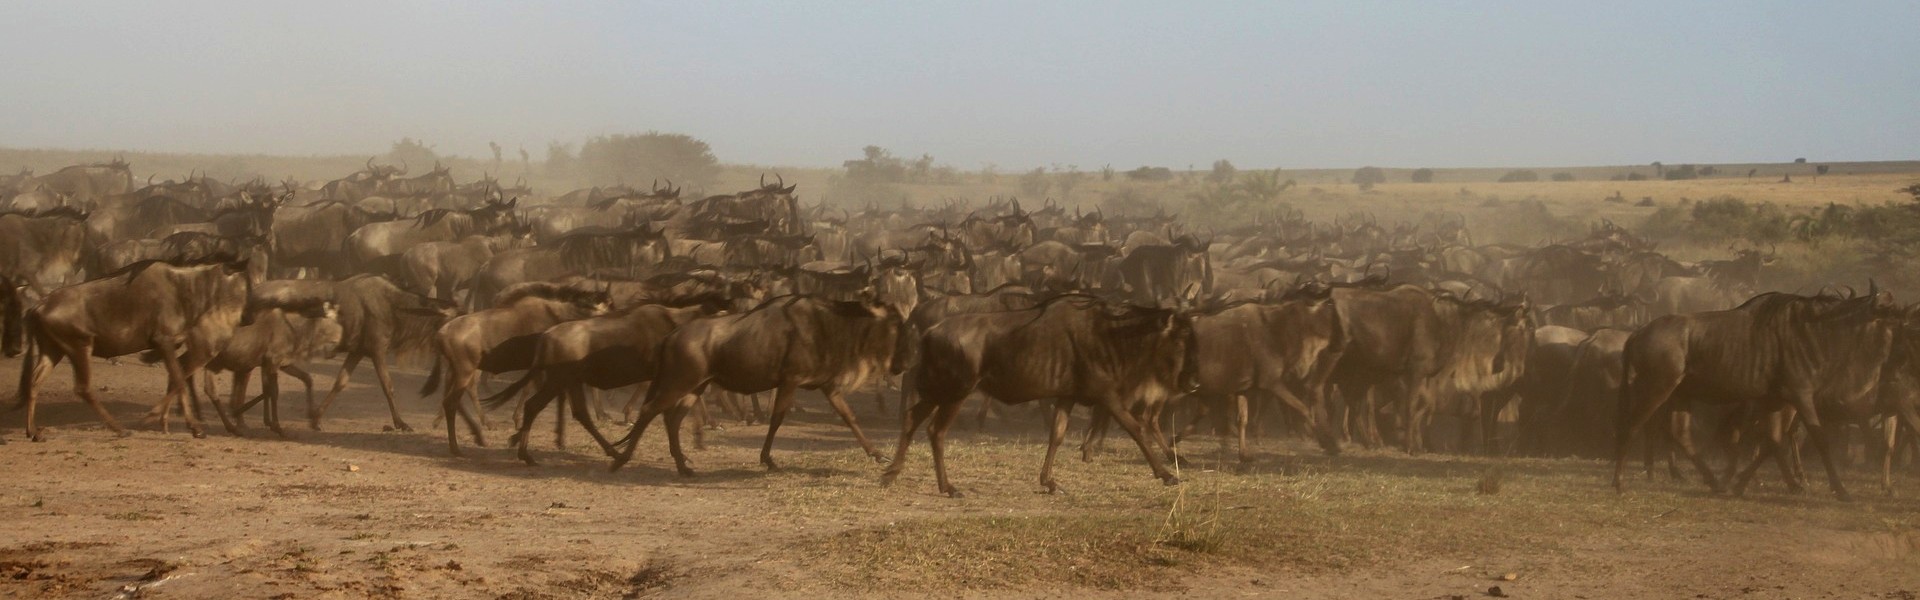 Safari Kenya Massai Mara